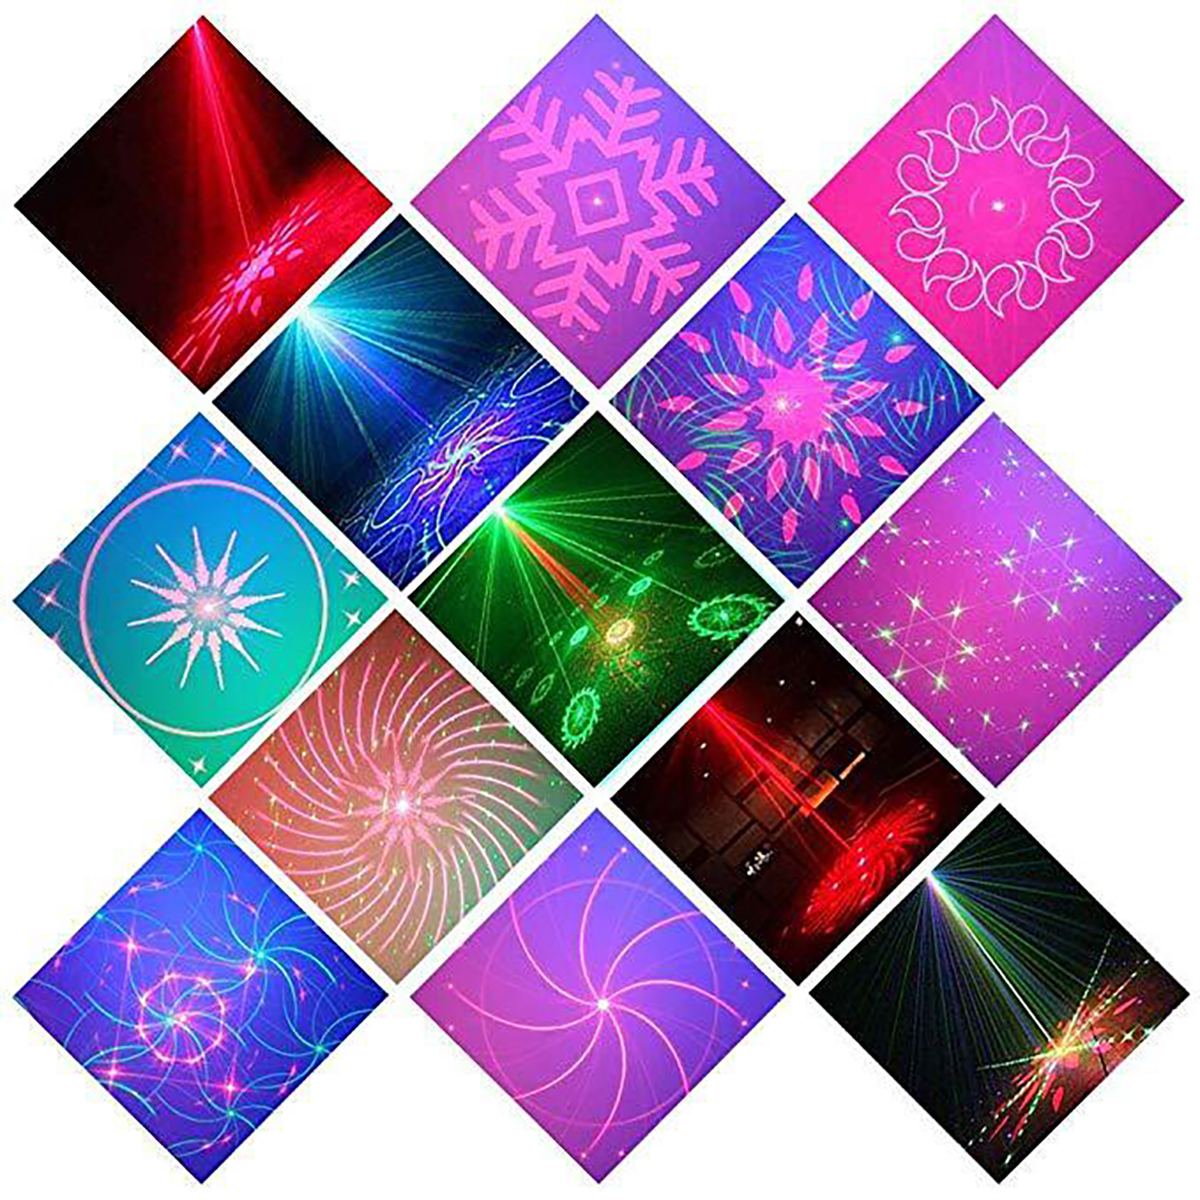 9W-48-Patterns-RGB-Projector-LED-Stage-Light-DJ-Disco-KTV-Home-Party-Lamp-Decor-AC100-240V-1745768-8